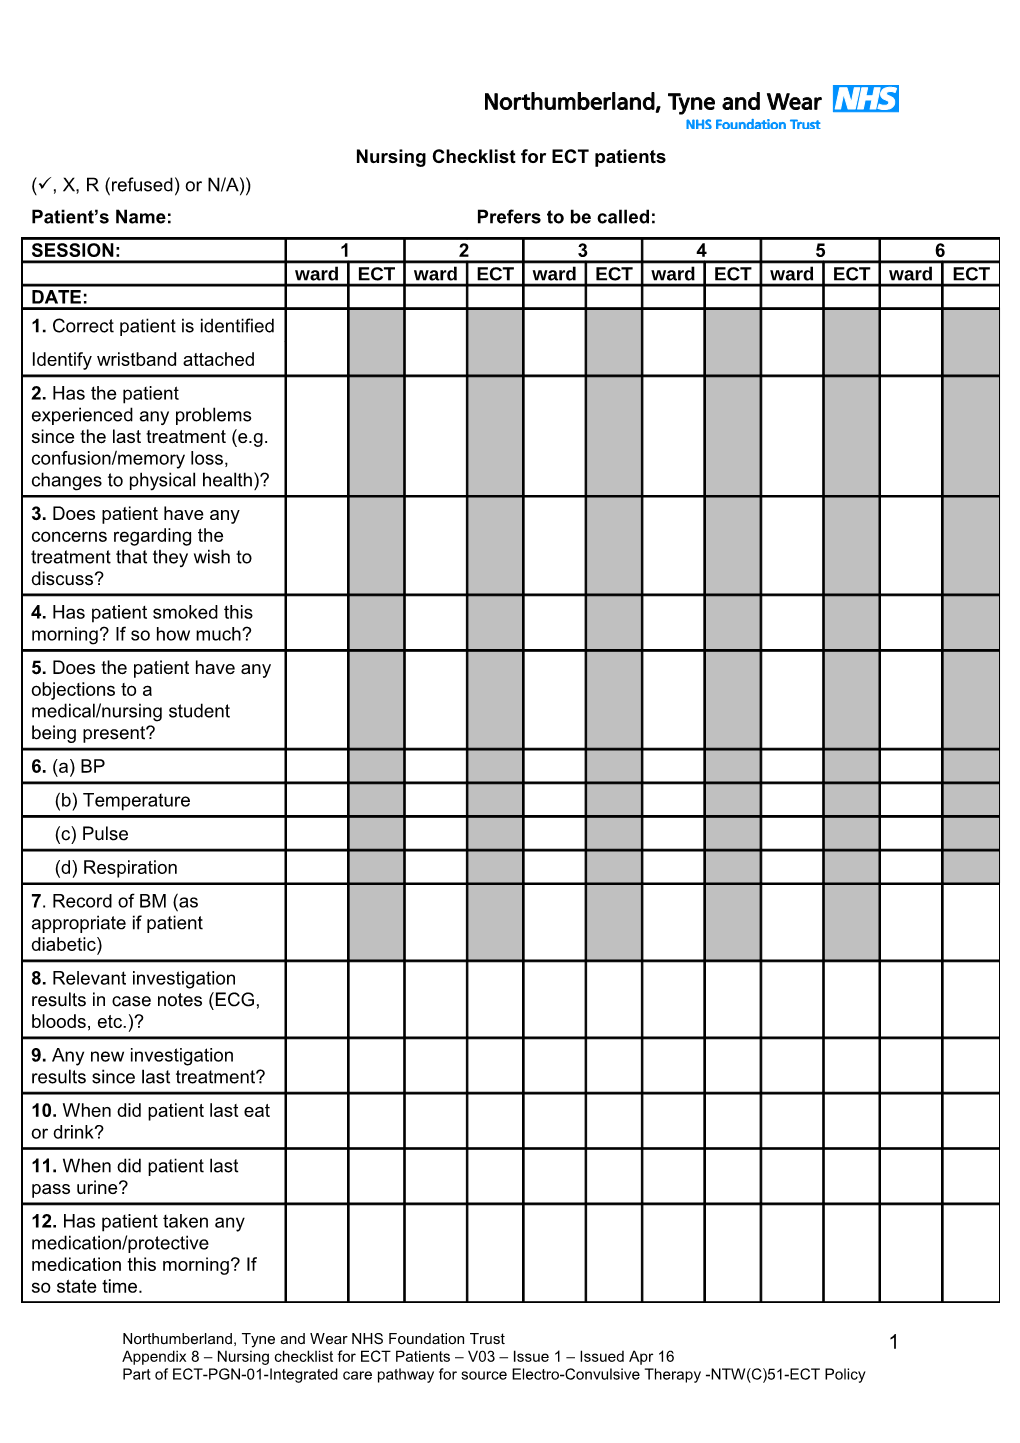 Nursing Checklist for ECT Patients